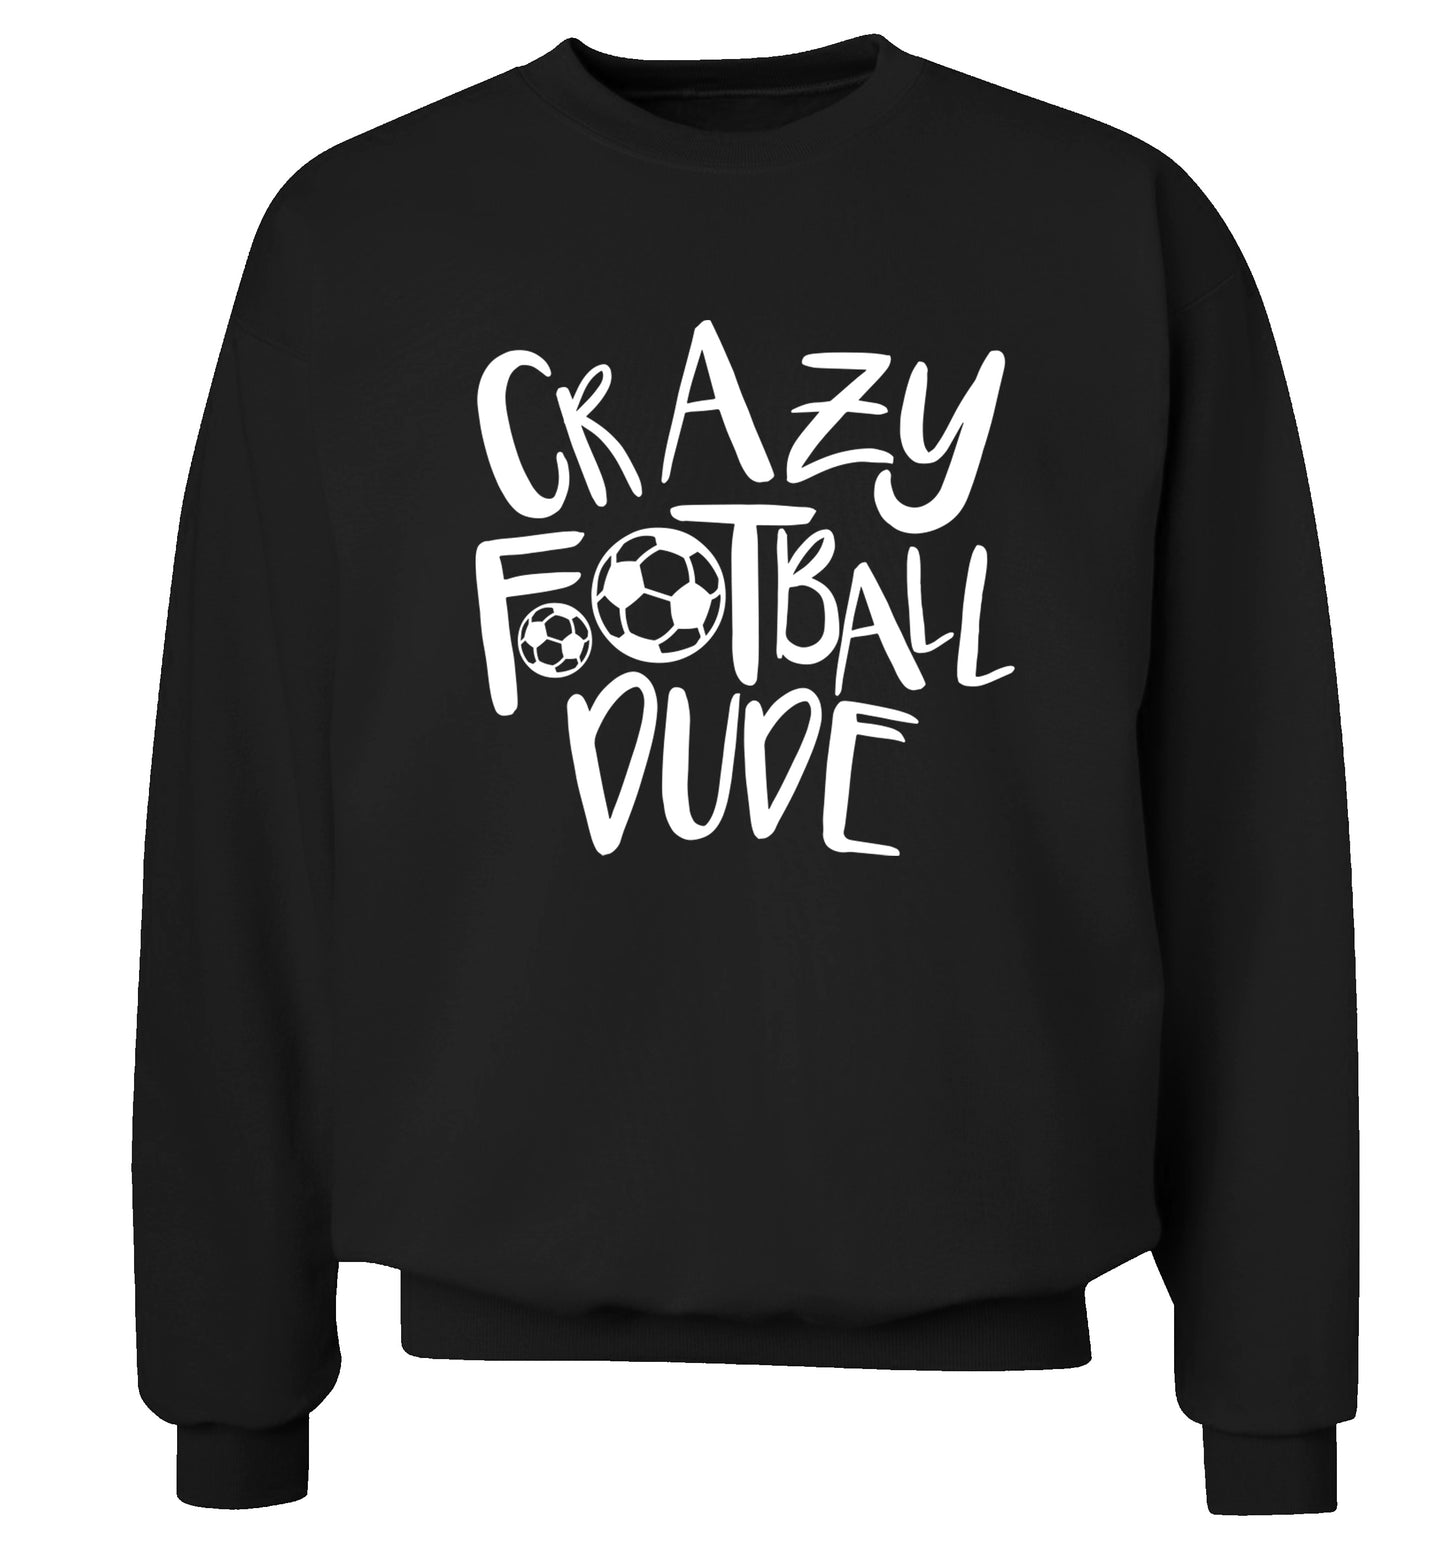 Crazy football dude Adult's unisexblack Sweater 2XL